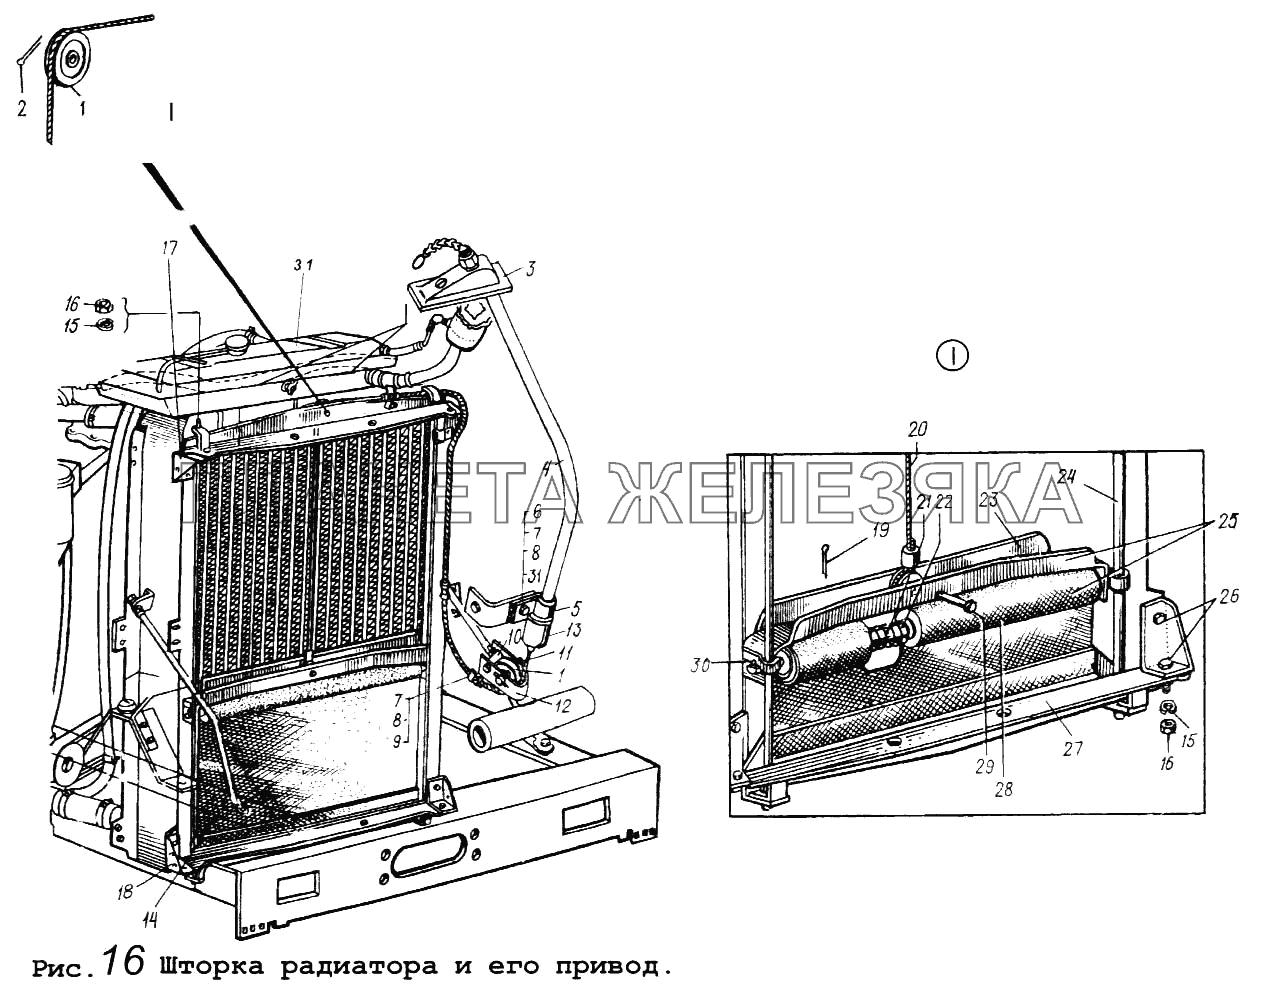 Шторка радиатора и его привод МАЗ-5434